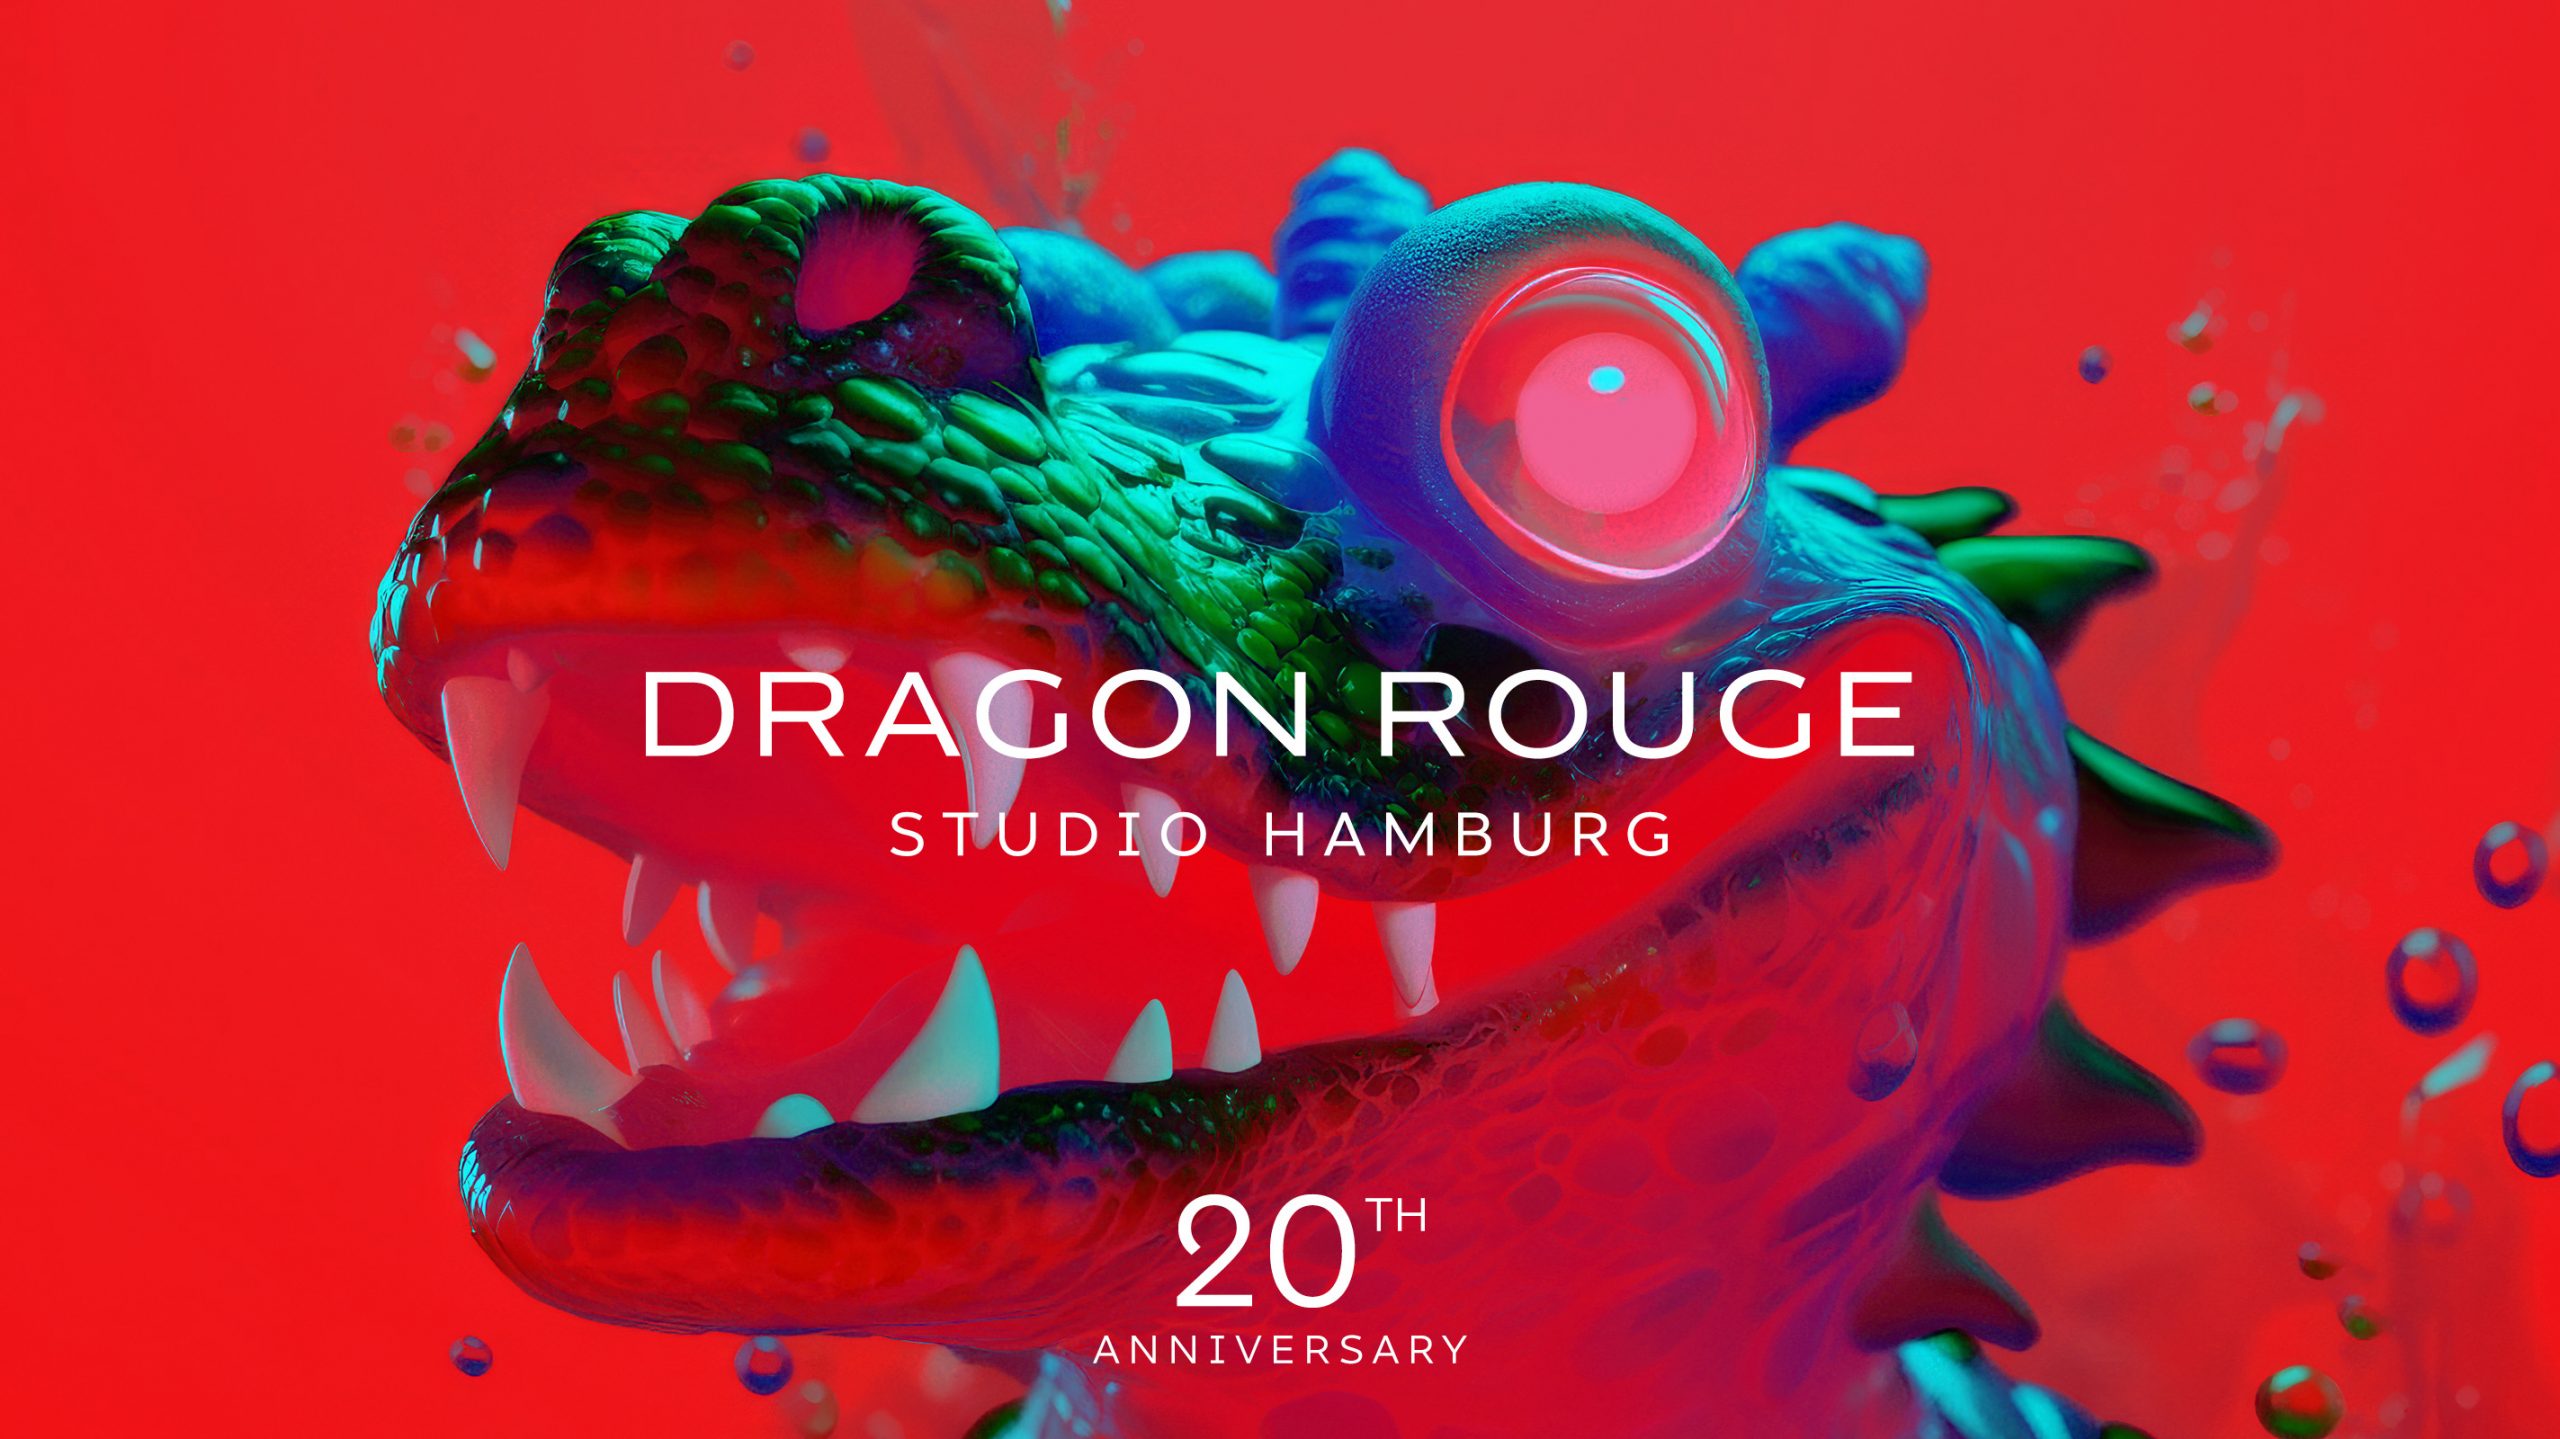 Dragon Rouge Studio Hamburg Agentur 20 Jahre